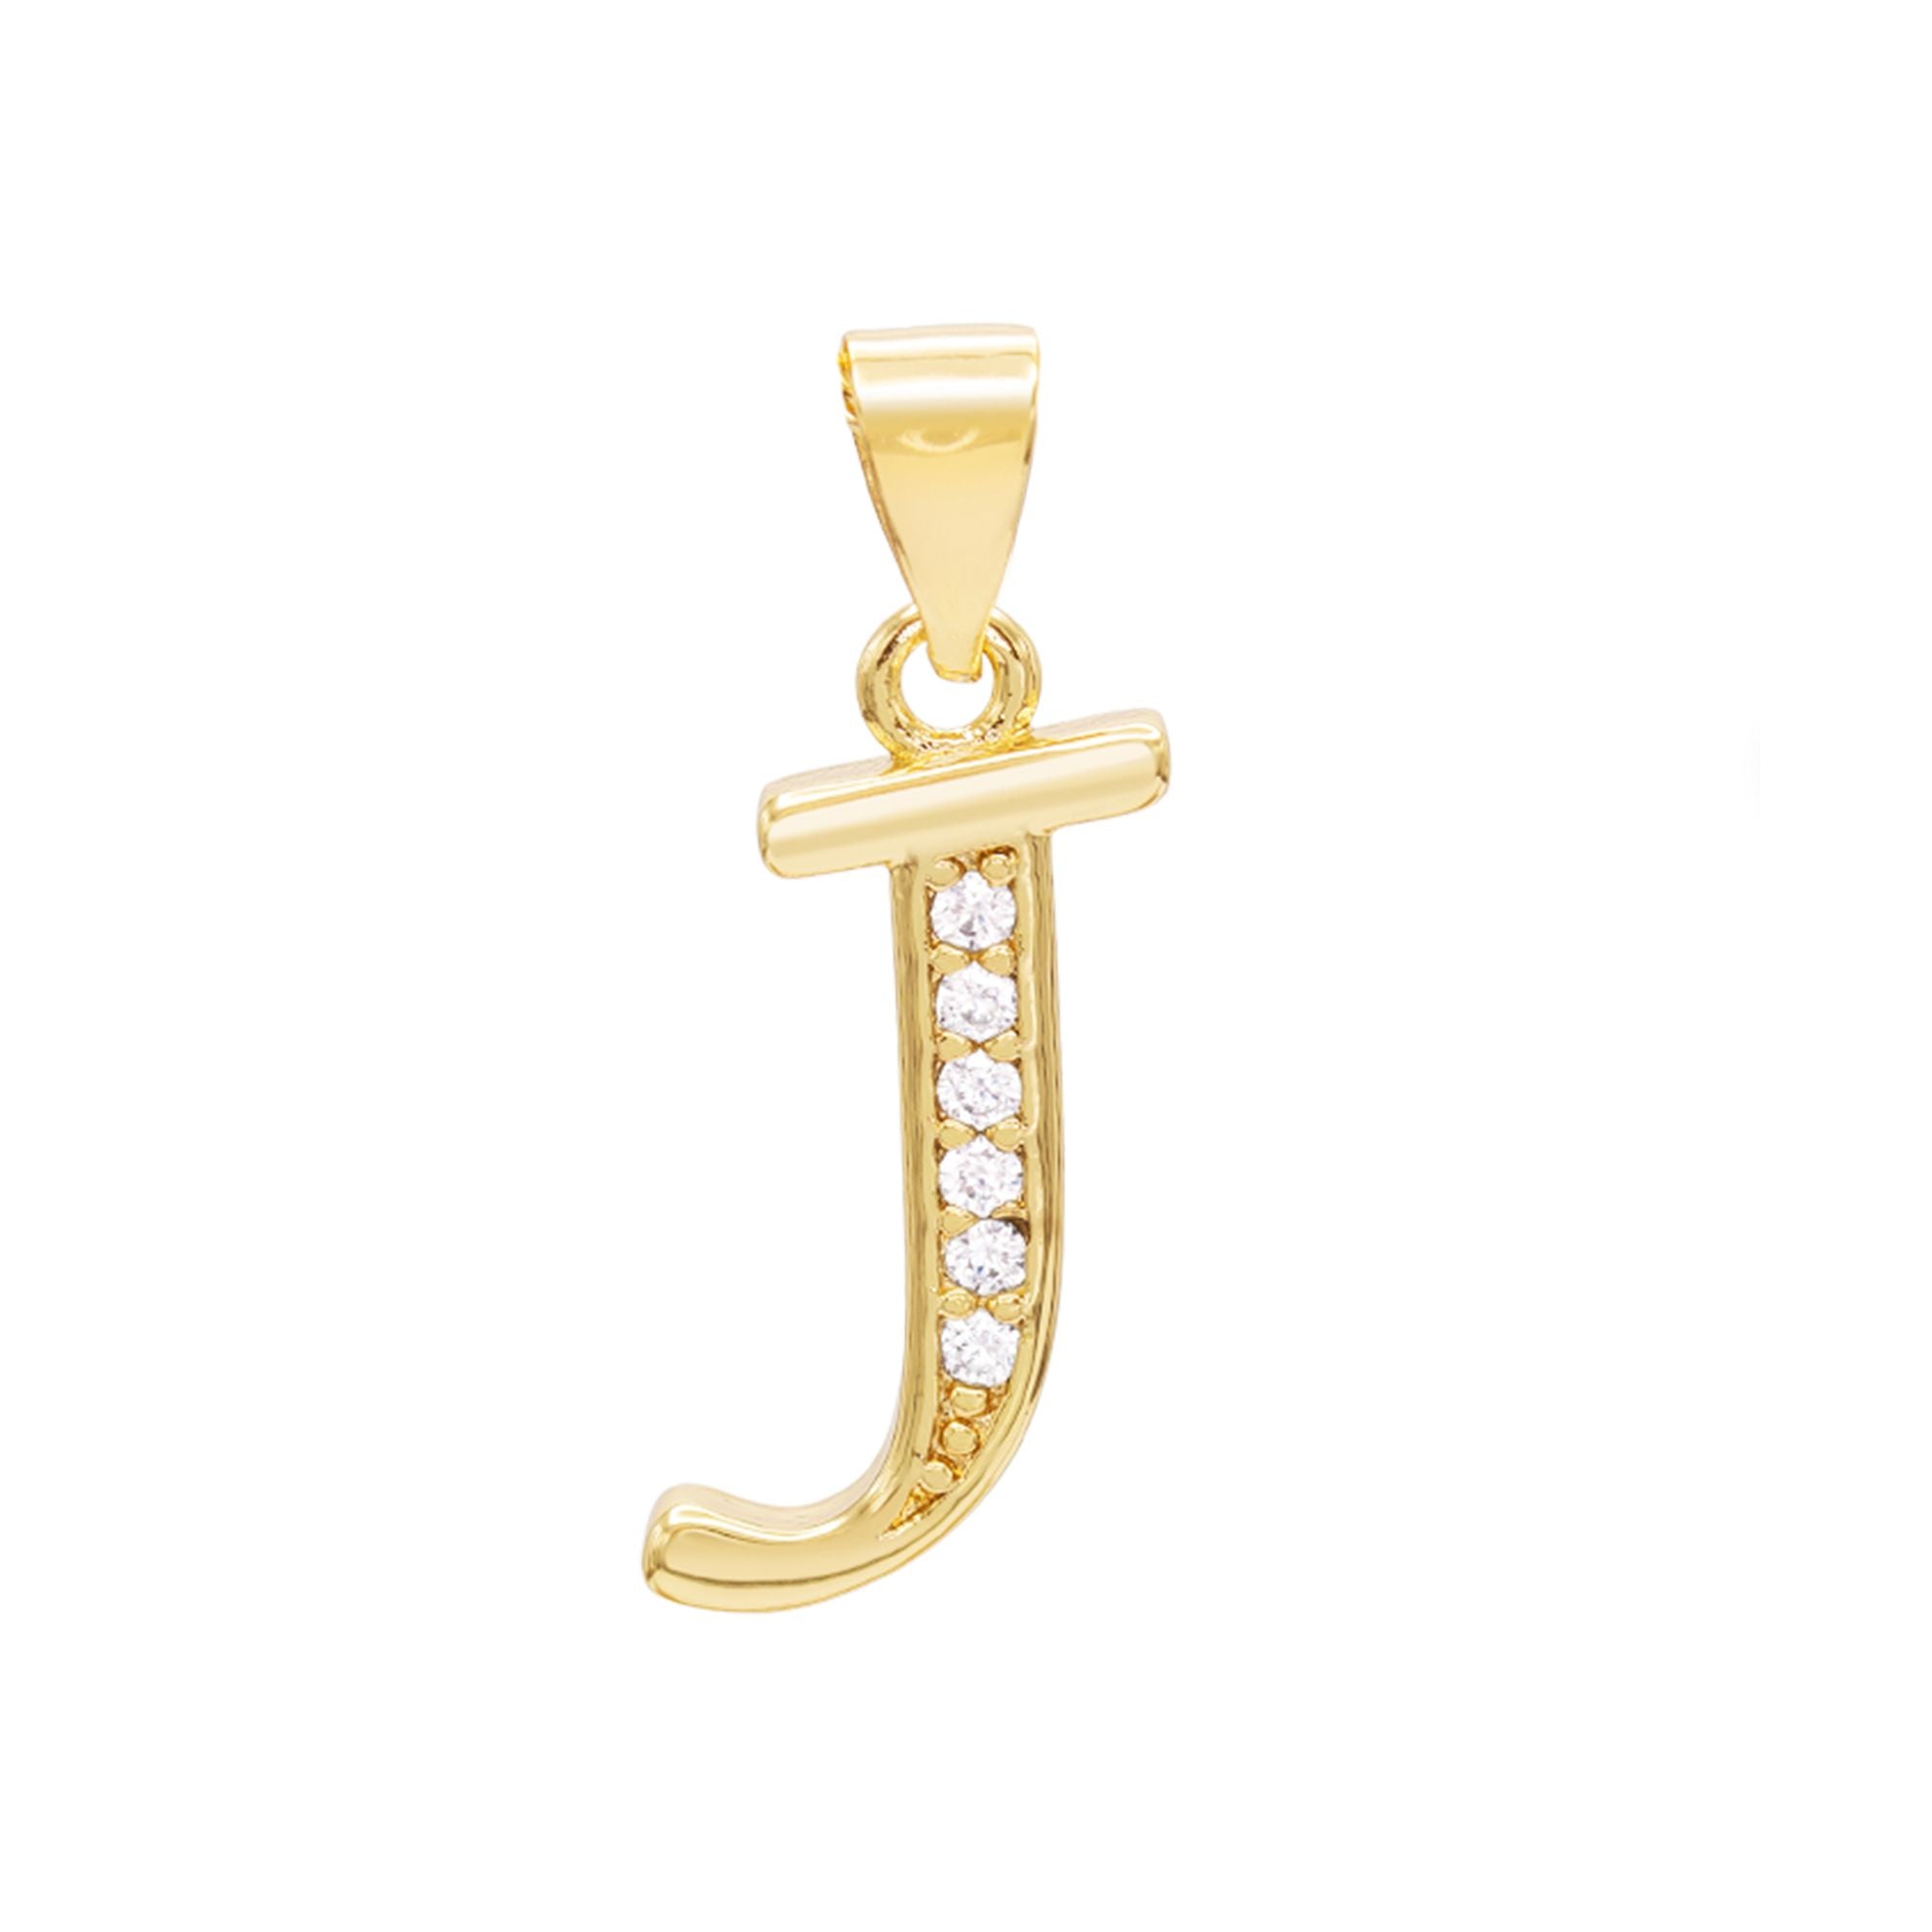 P 14K Anklet Bracelet Gold Filled Cubic Zirconia Charm Figaro Foot Chain Set 10 Charm